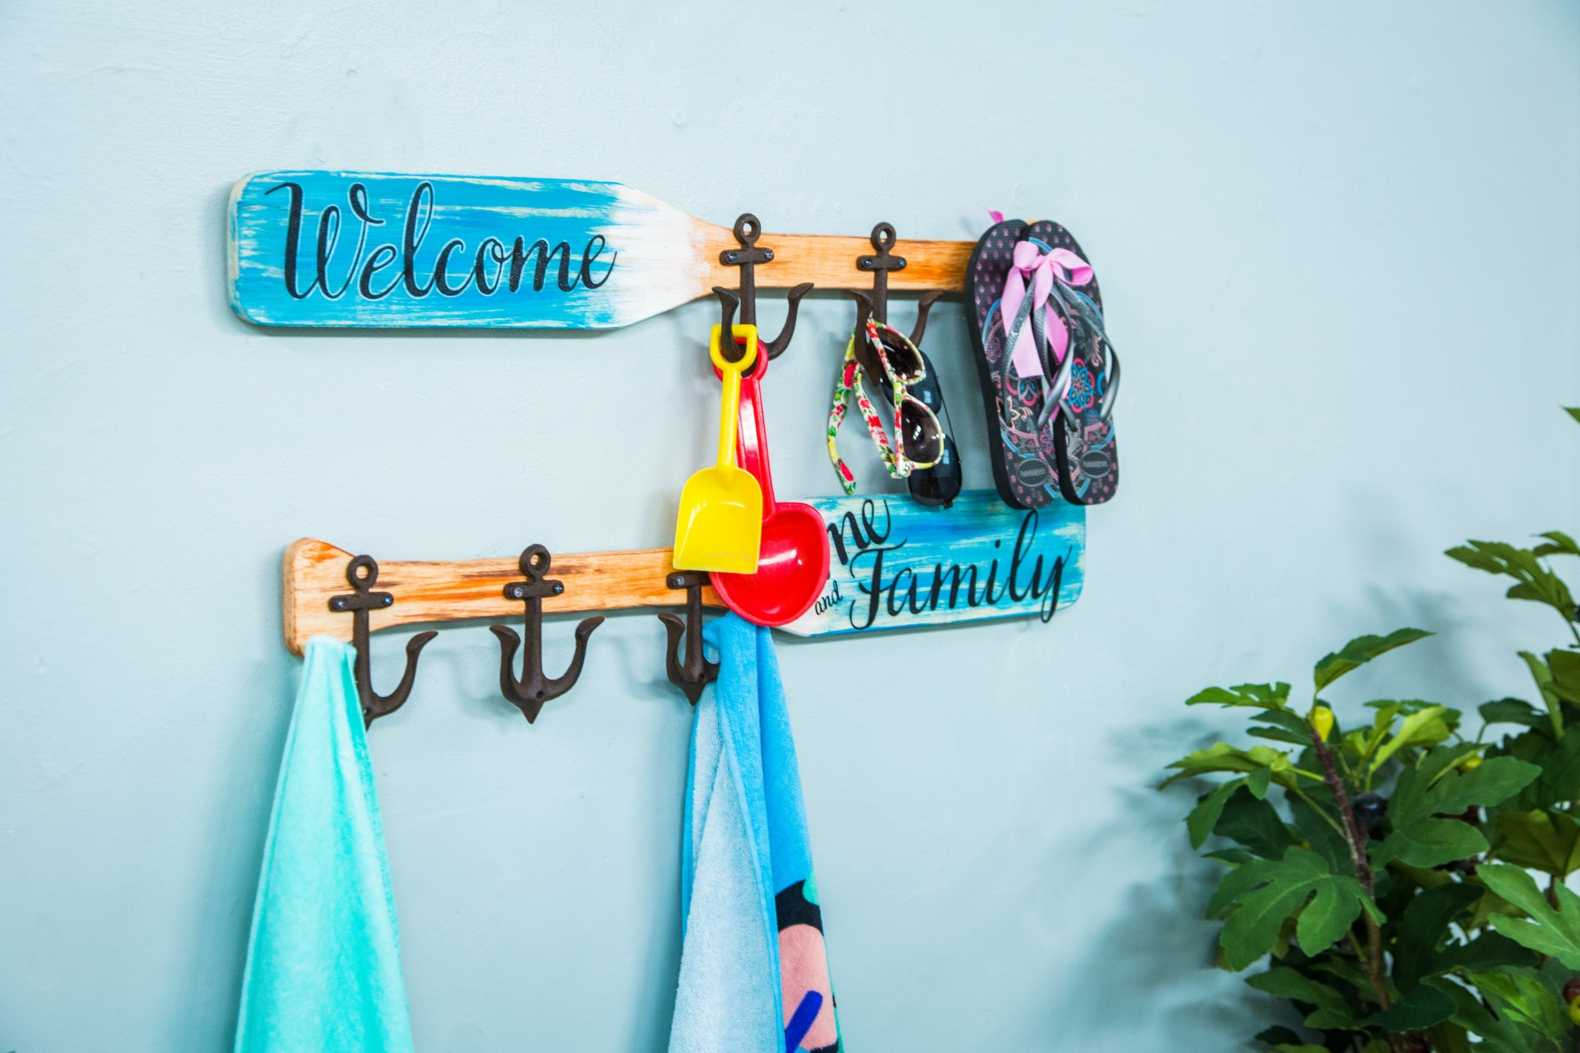 Wardrobe children's room DIY wardrobe hooks themselves make instruction